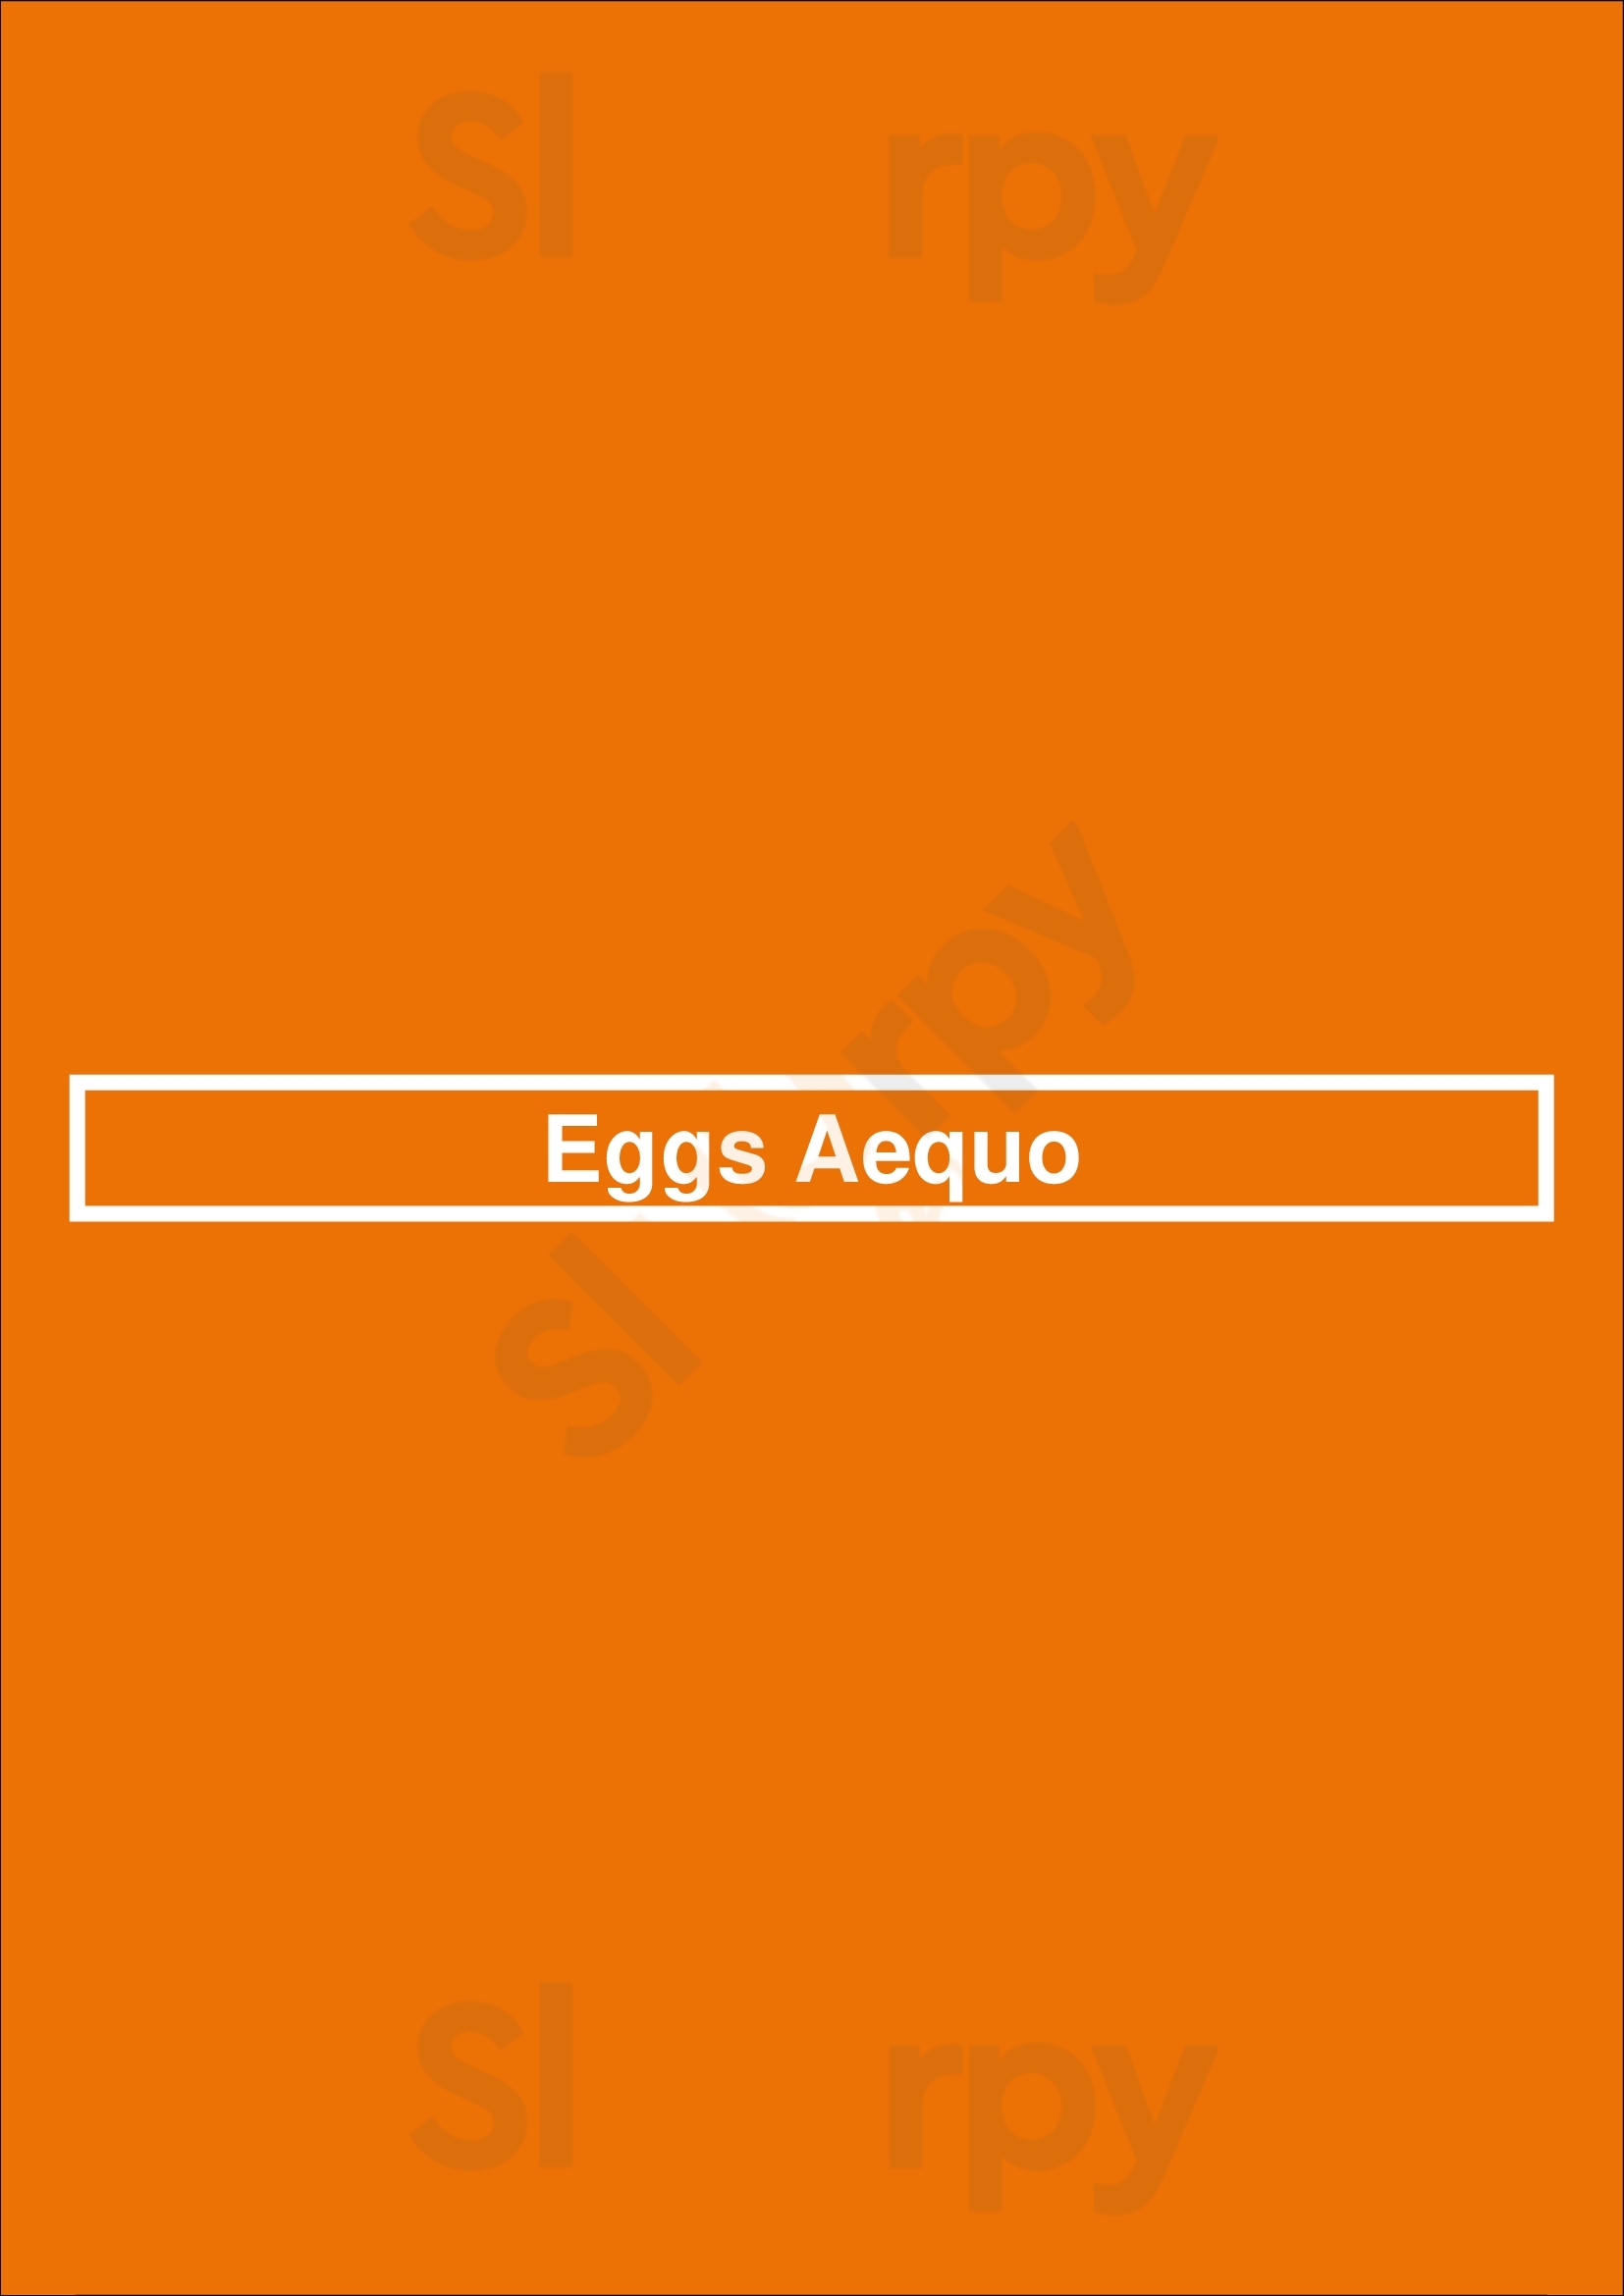 Eggs Aequo Lyon Menu - 1